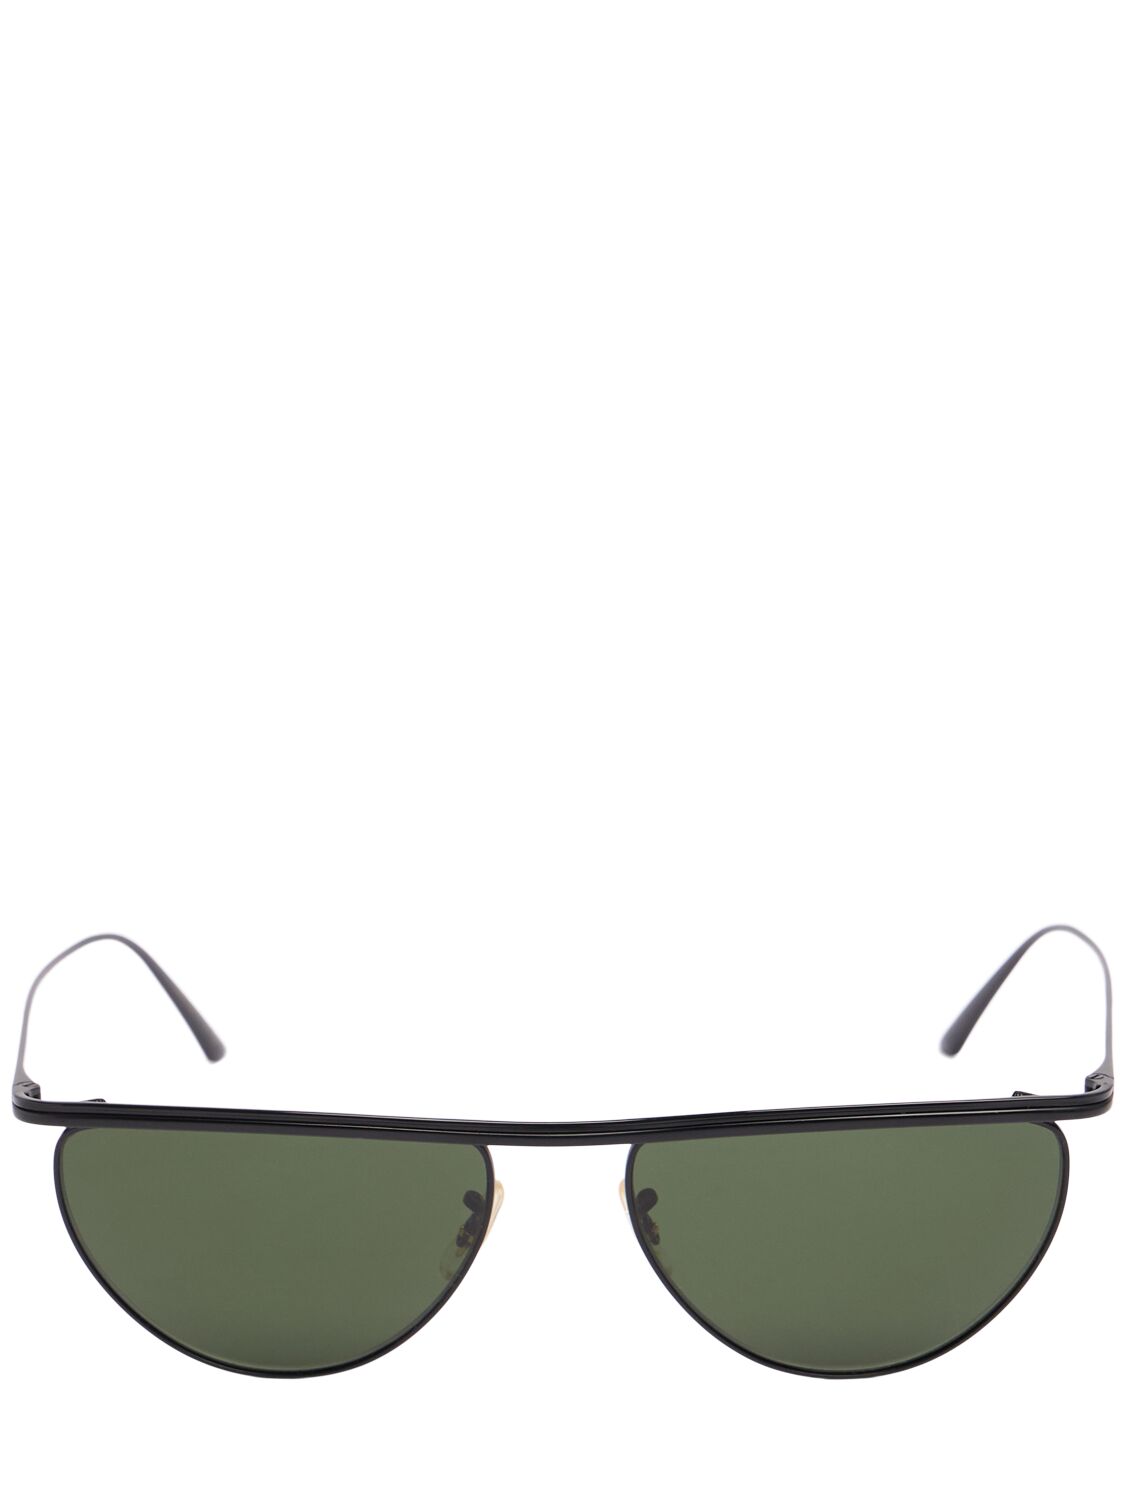 X Oliver Peoples Metal Sunglasses